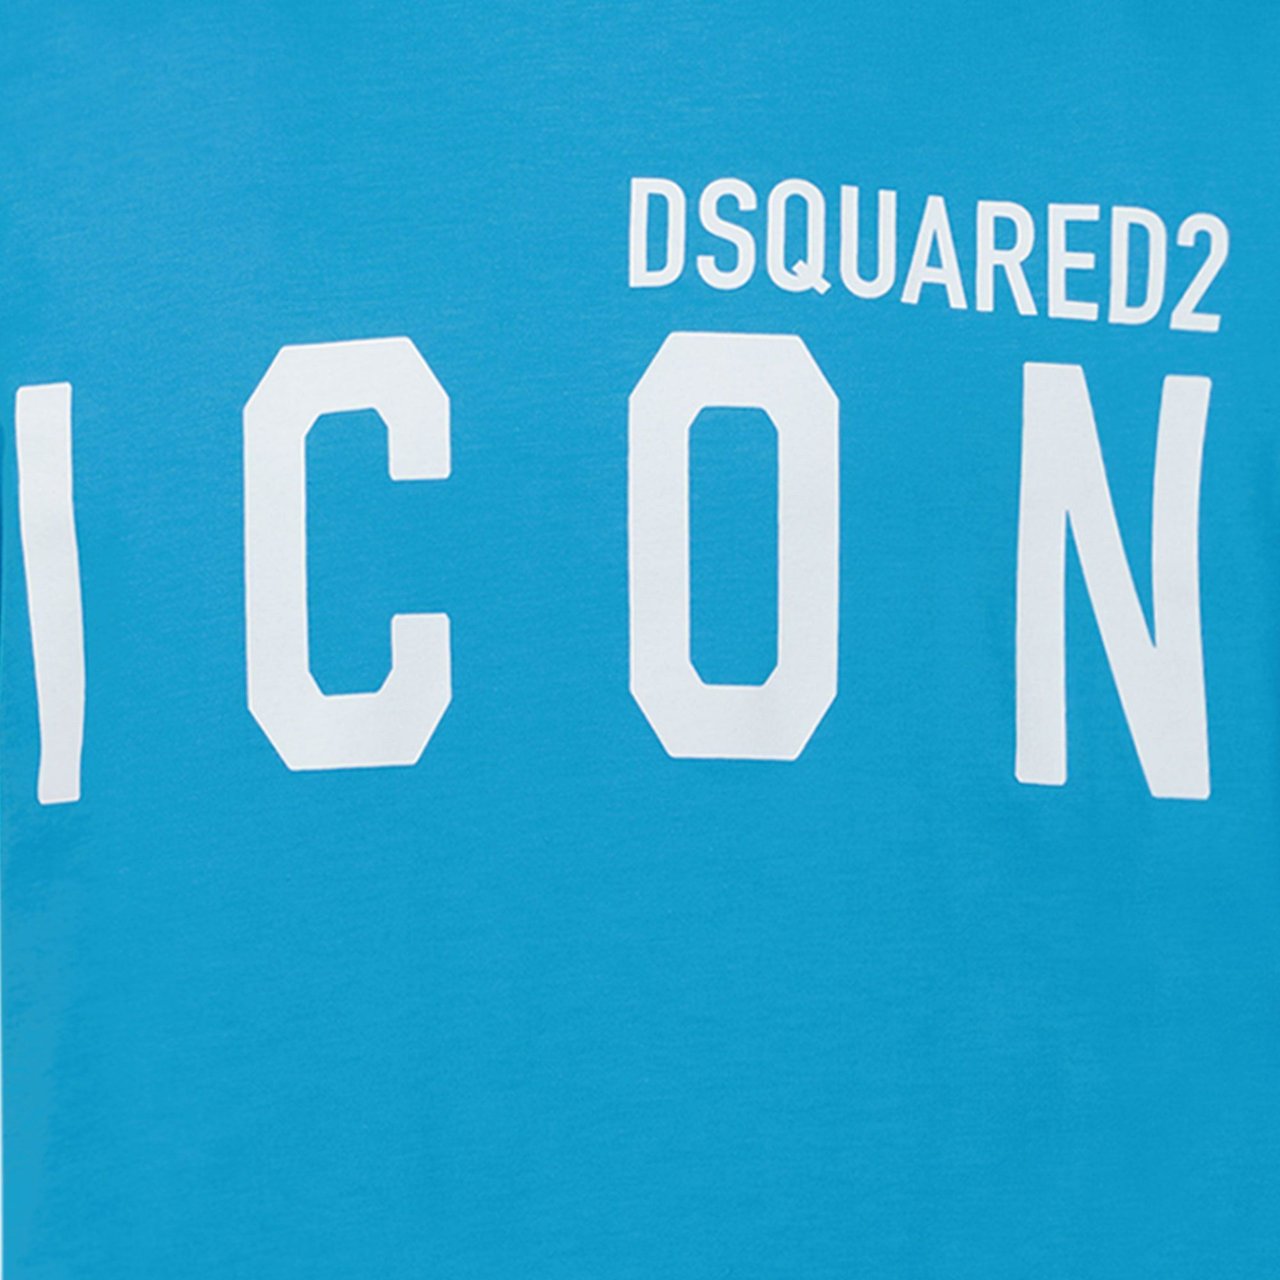 Dsquared2 Dsquared2 DQ1359 D00MV kinder t-shirt turquoise Blauw